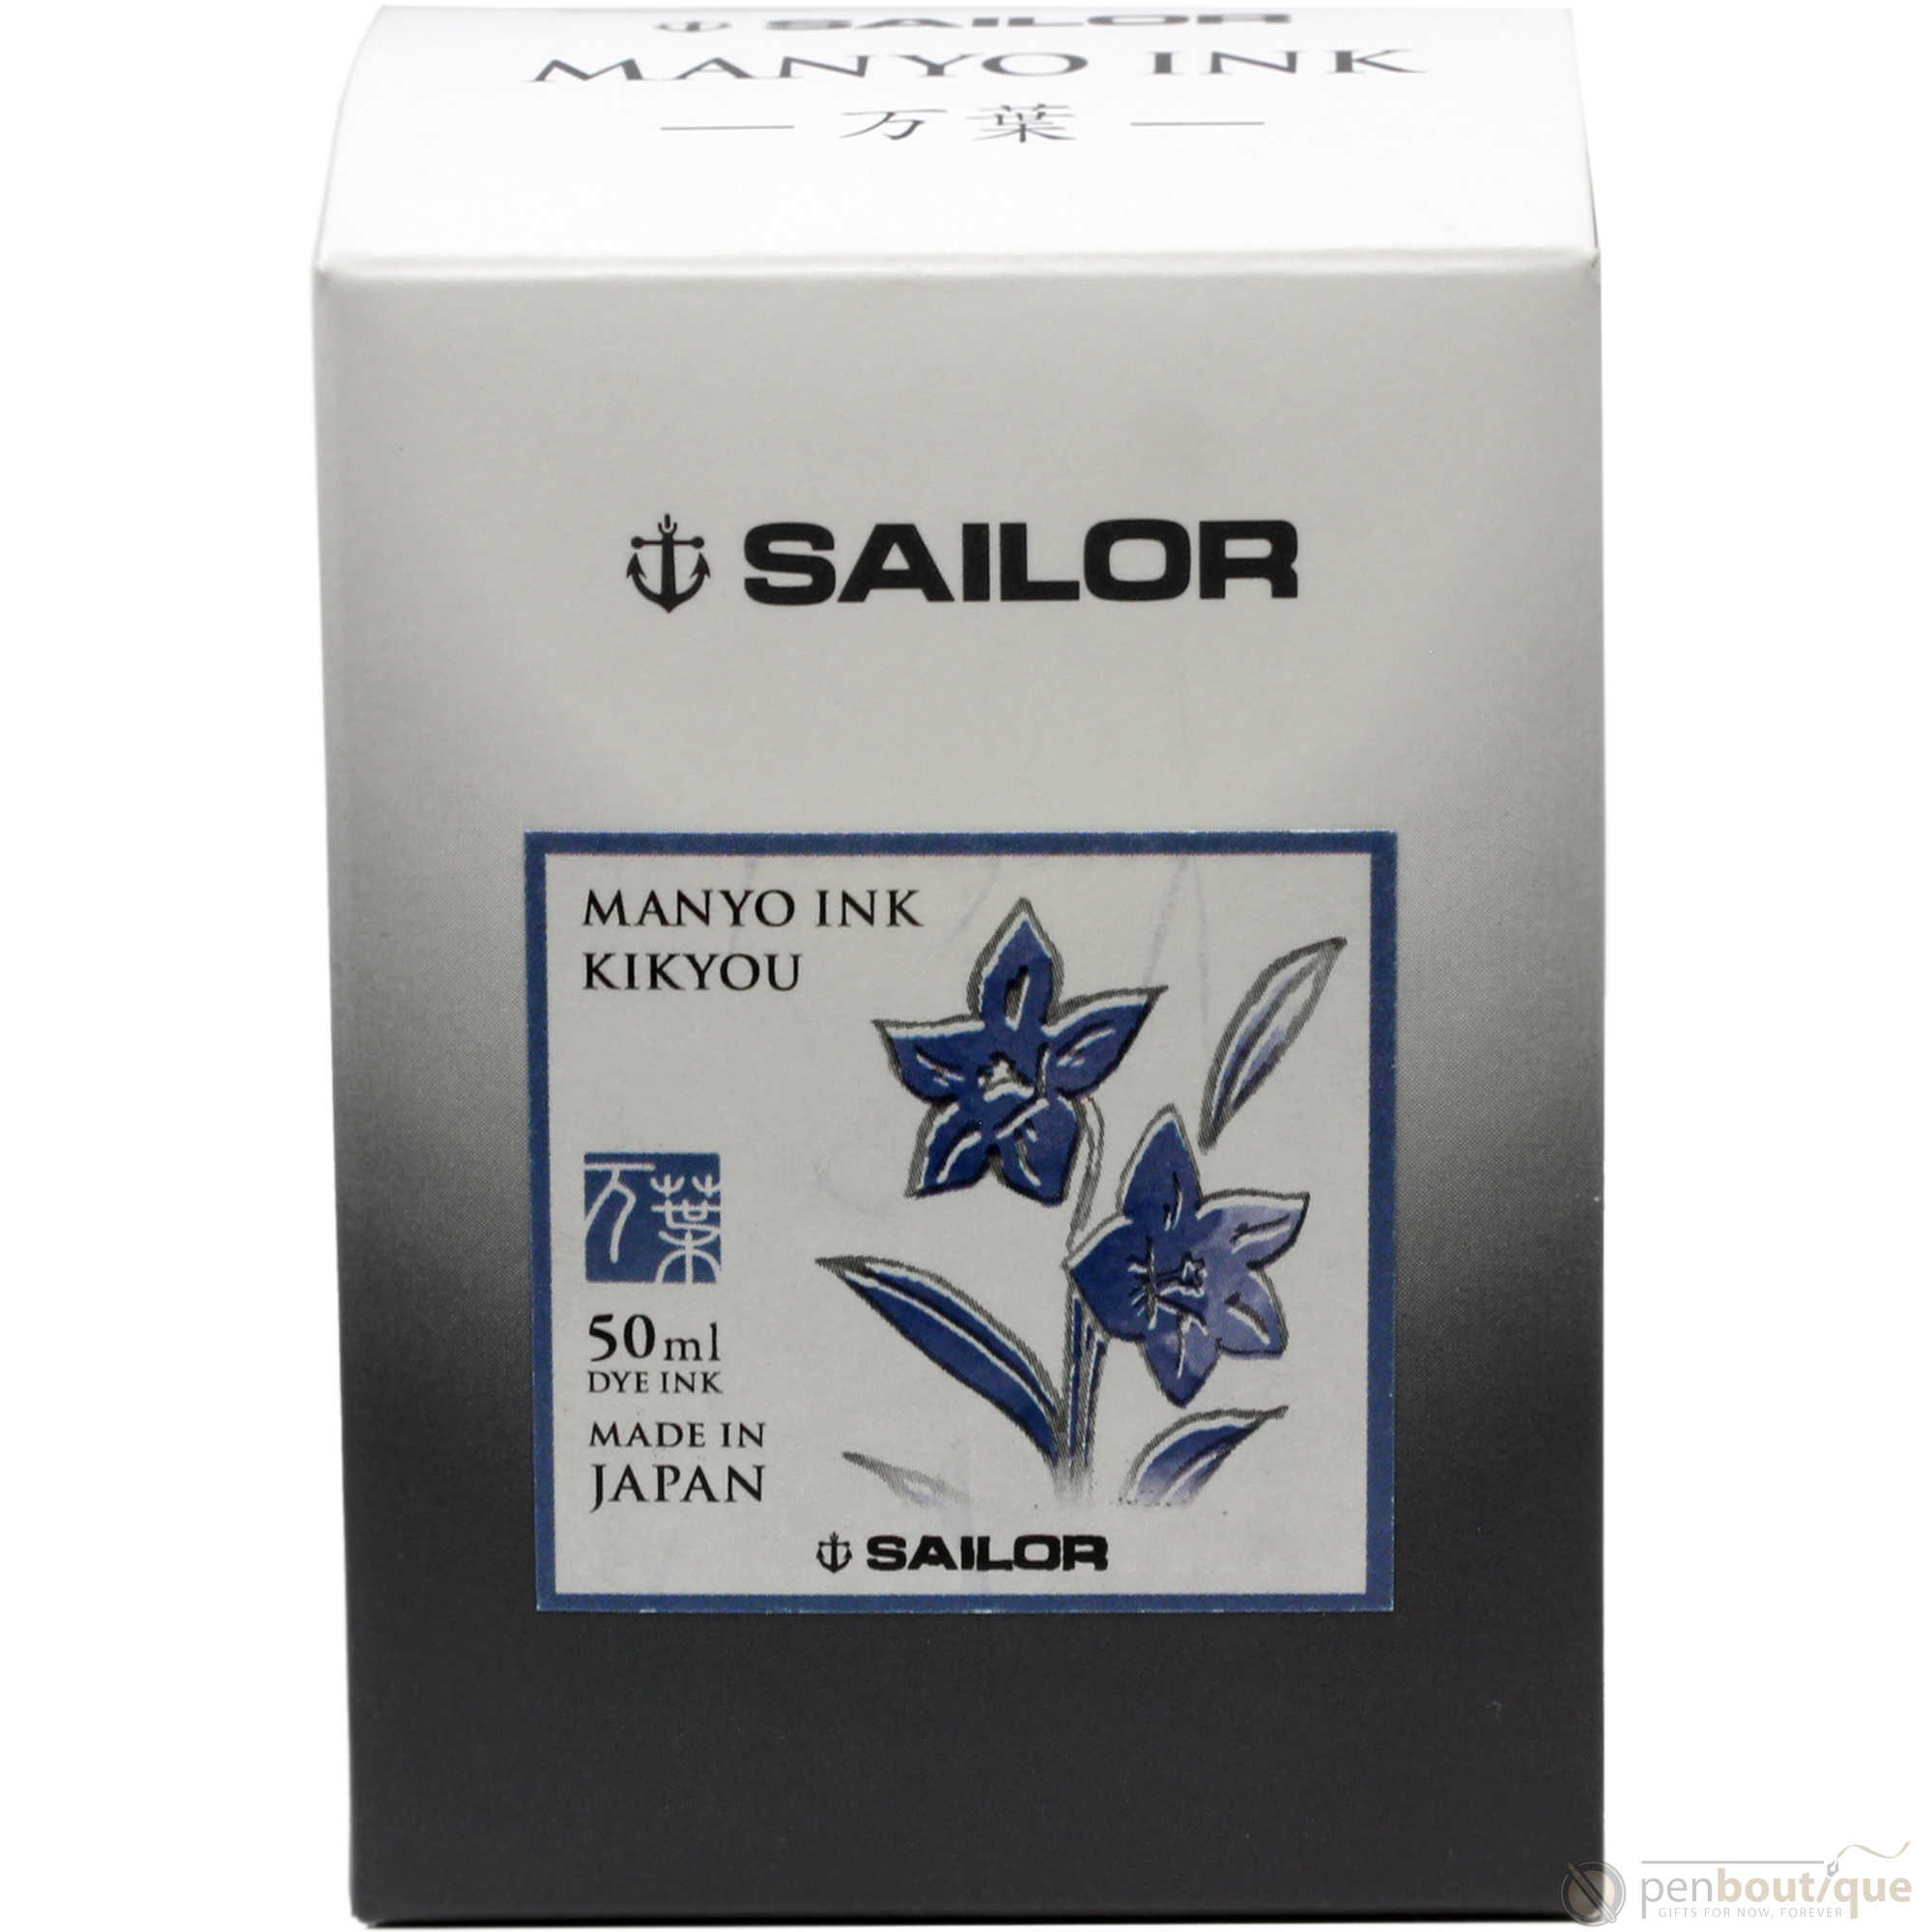 Sailor Manyo Ink Bottle - Kikyou - 50ml-Pen Boutique Ltd